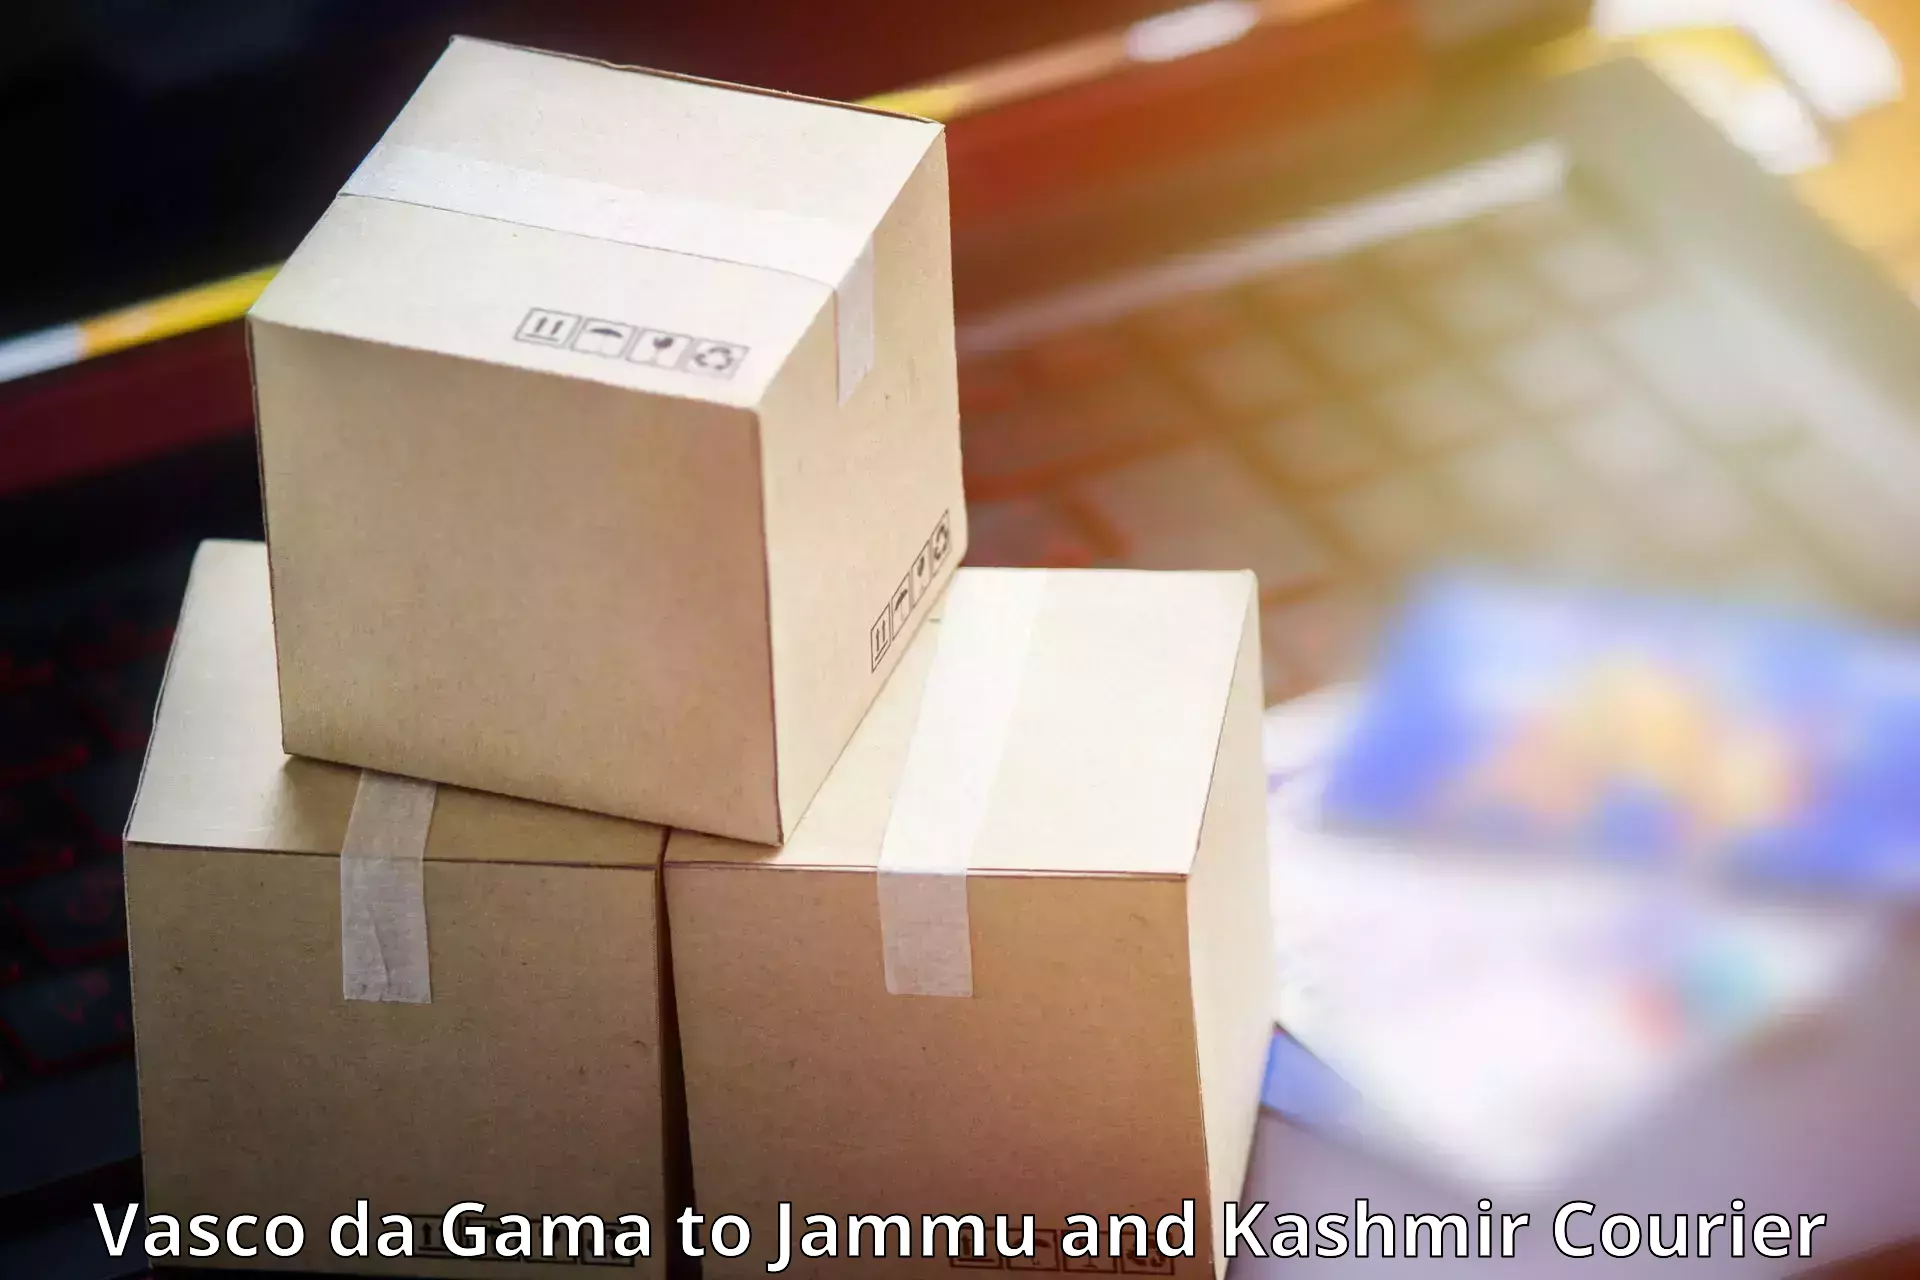 Reliable delivery network Vasco da Gama to Jammu